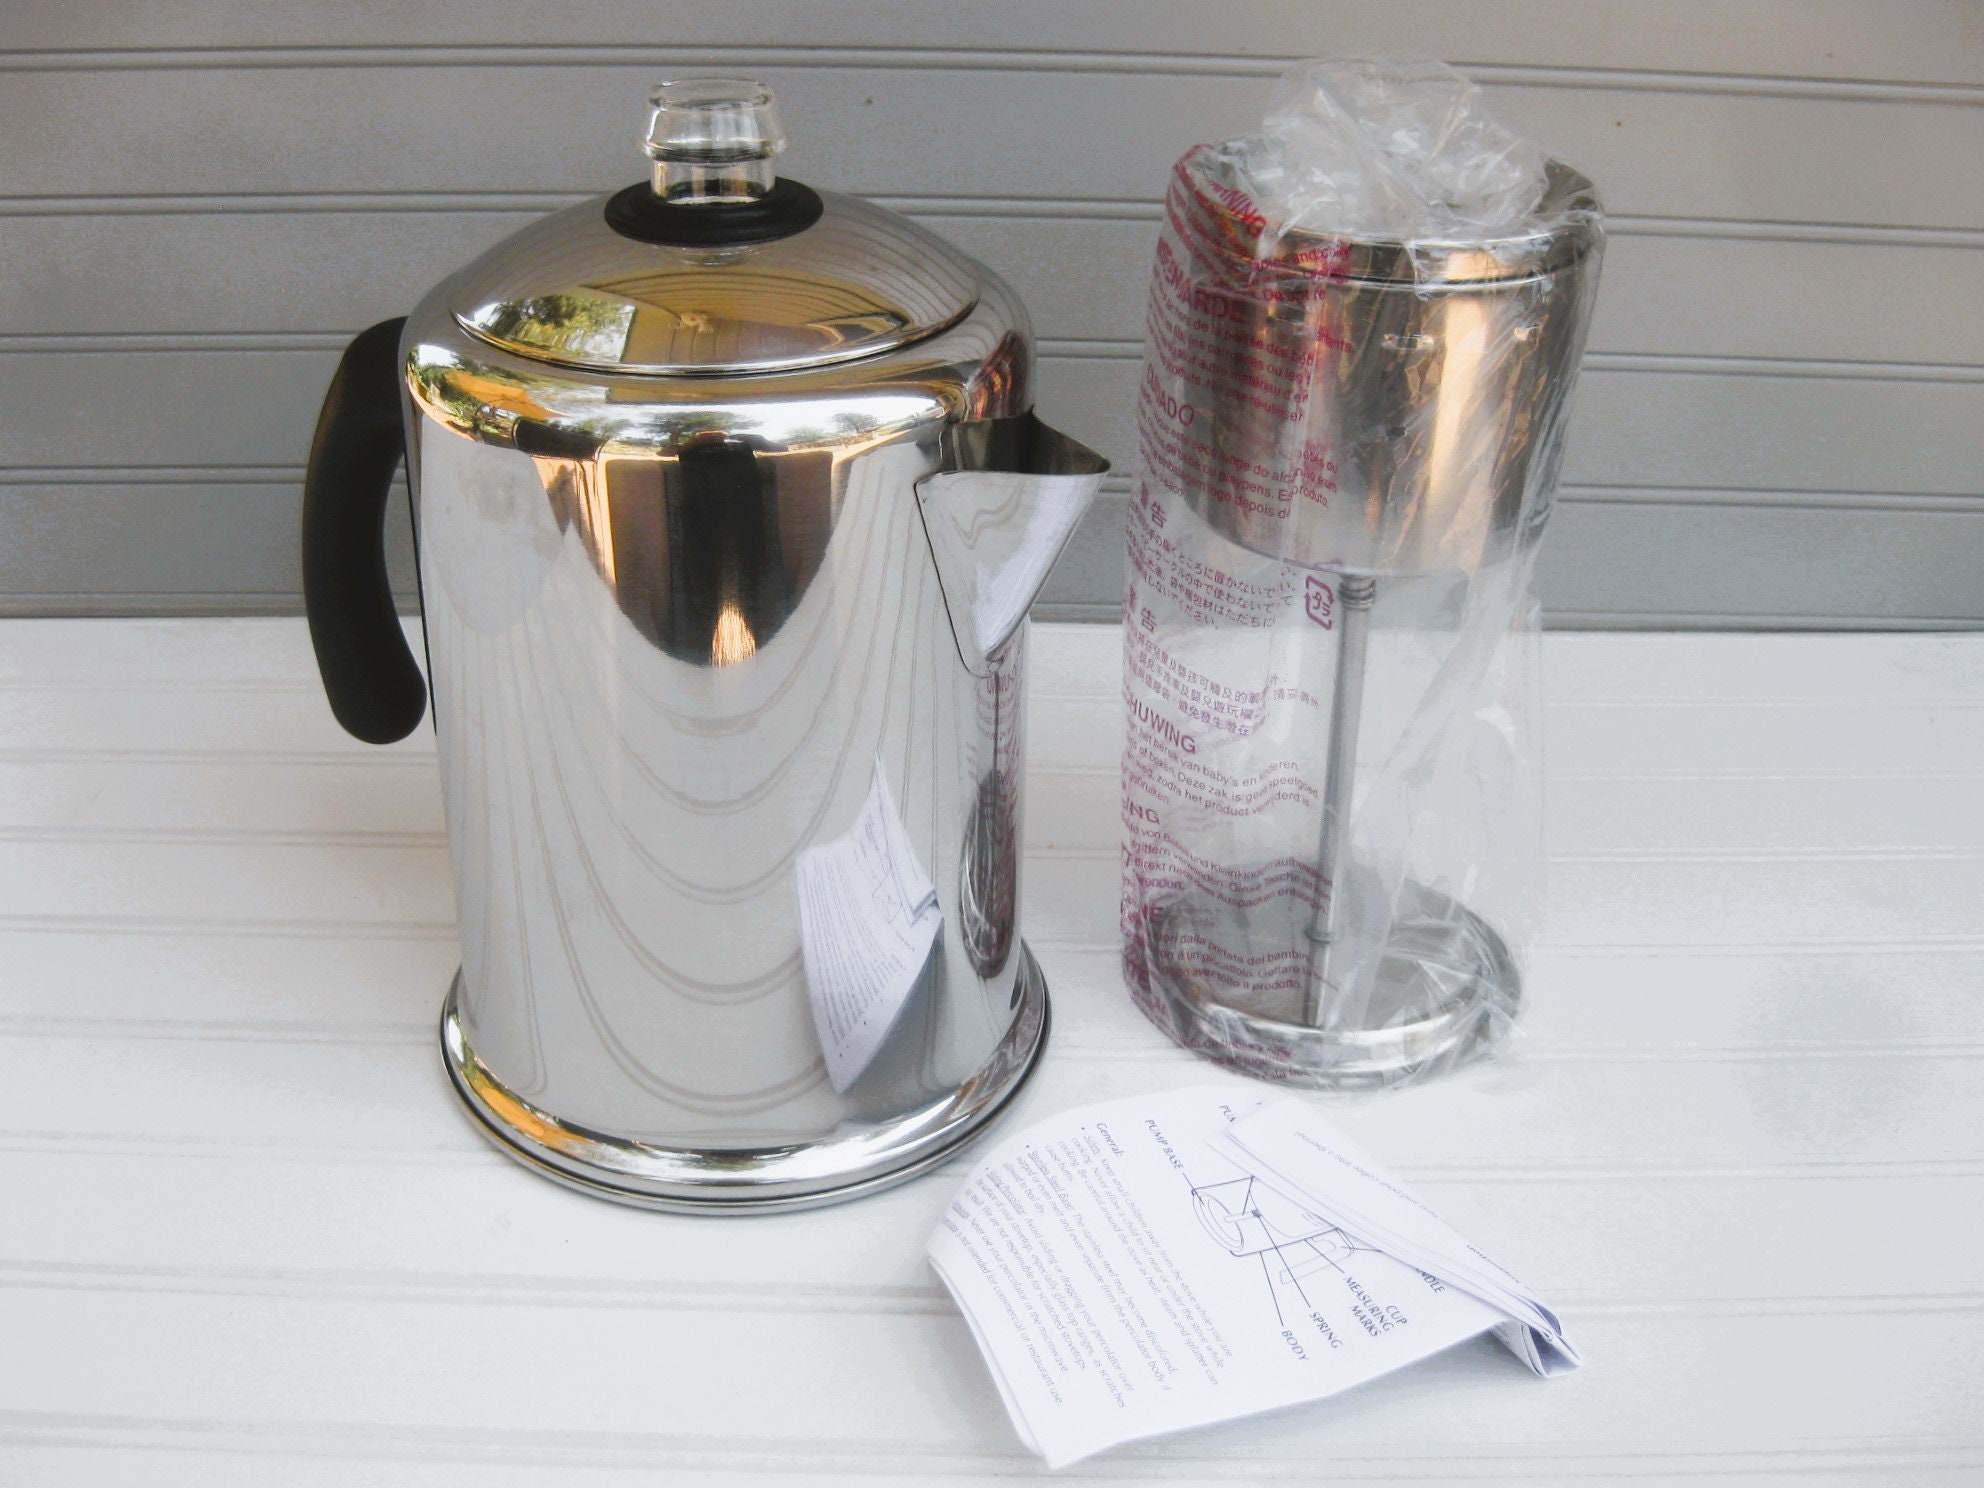 Farberware Stove Top Percolator Coffee Pot 4-8 Cup Stainless Steel